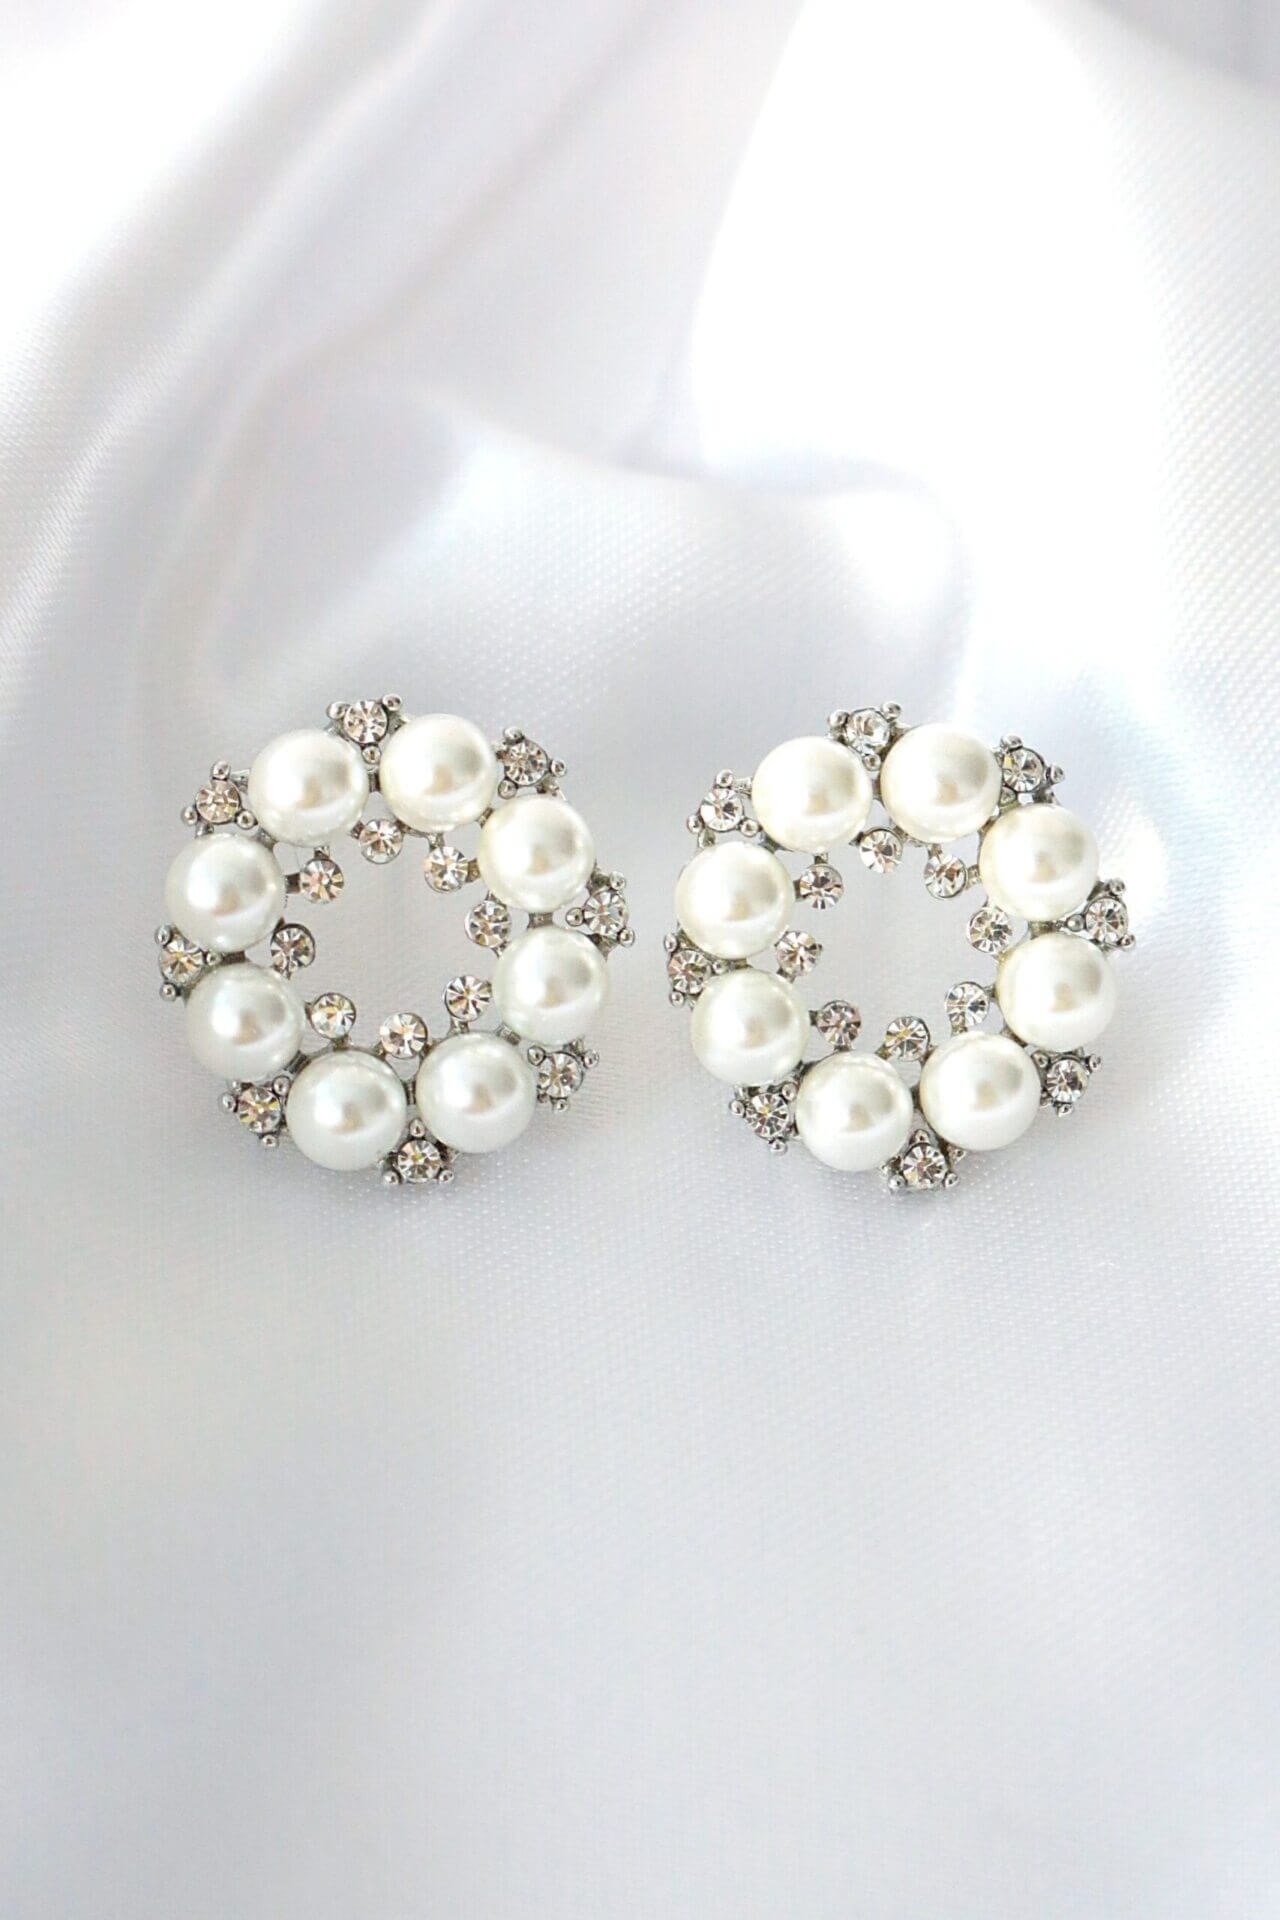 Weiduoli 925 Silver Fashion Wild Inlay Pearl White Stud Earrings 